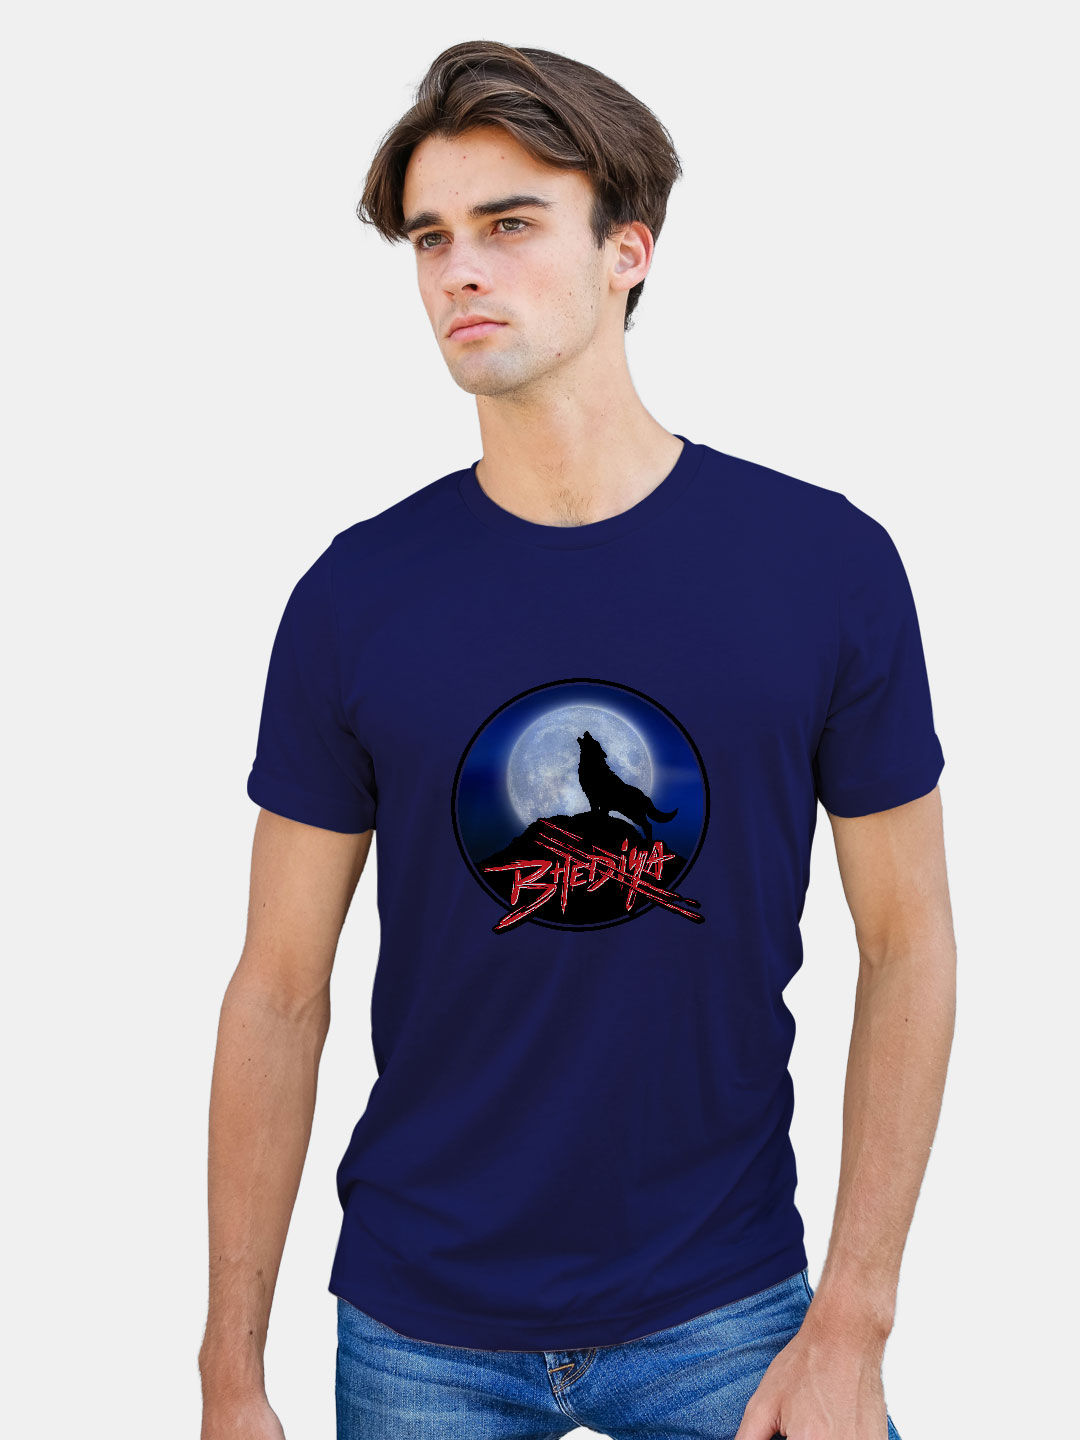 Buy Bhediya Growl Navy Blue - Male Designer T-Shirts T-Shirts Online